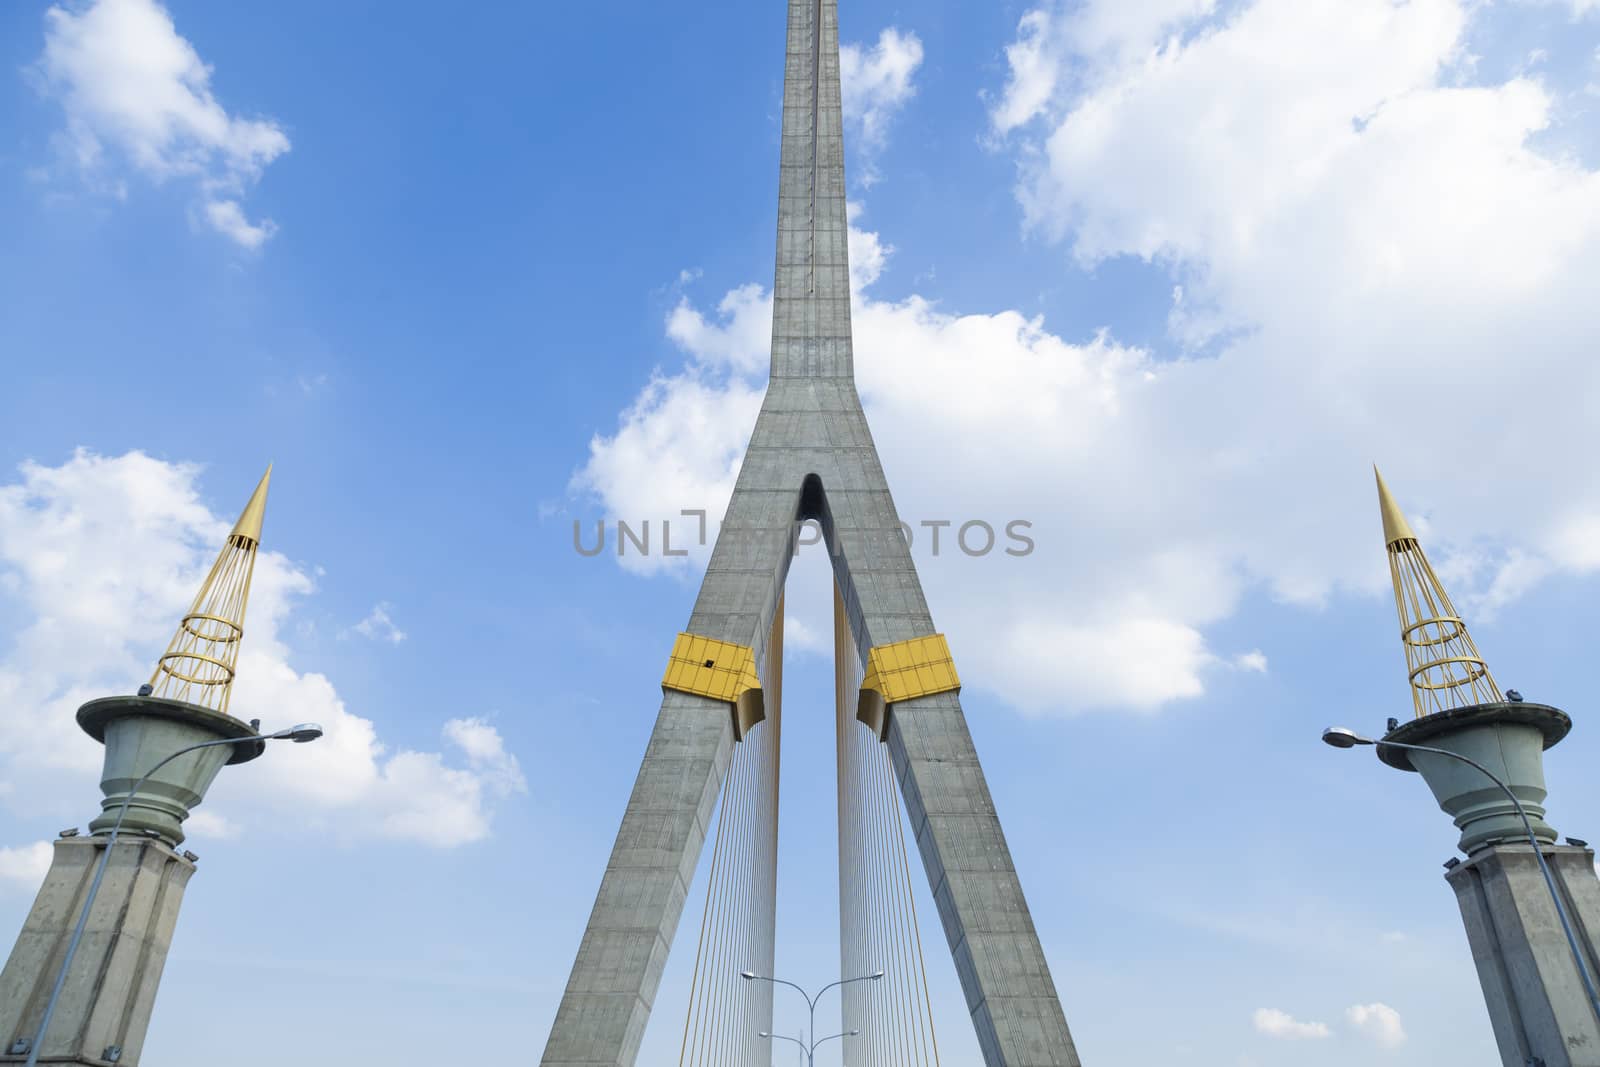 Rama VIII Bridge by a454